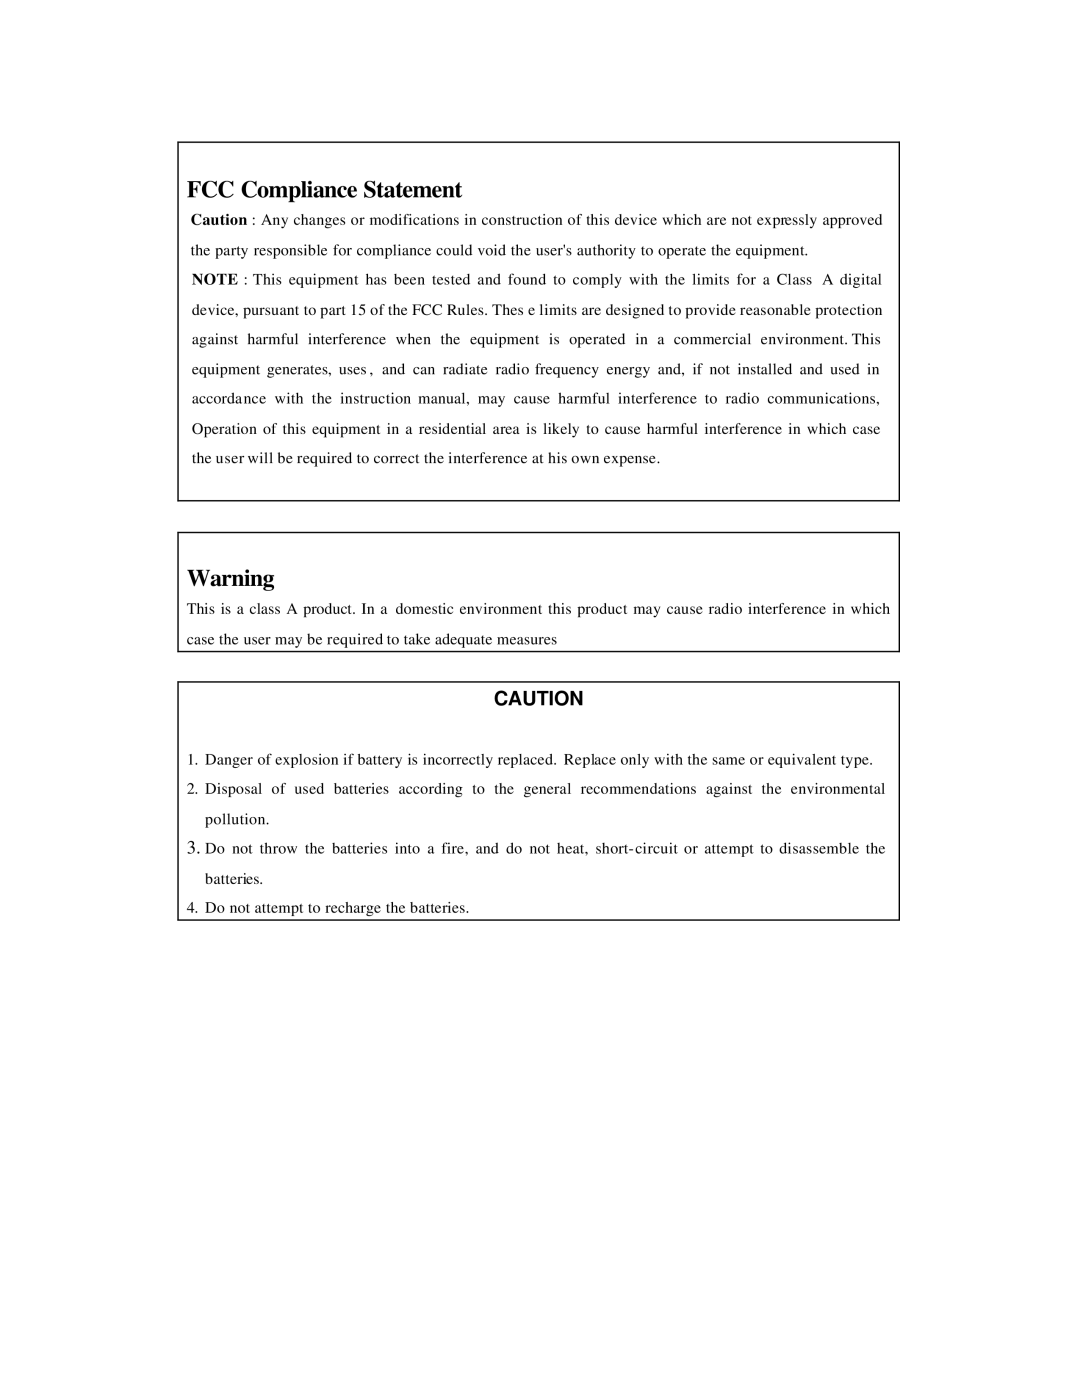 Maxtor ELX16-240 manual FCC Compliance Statement 